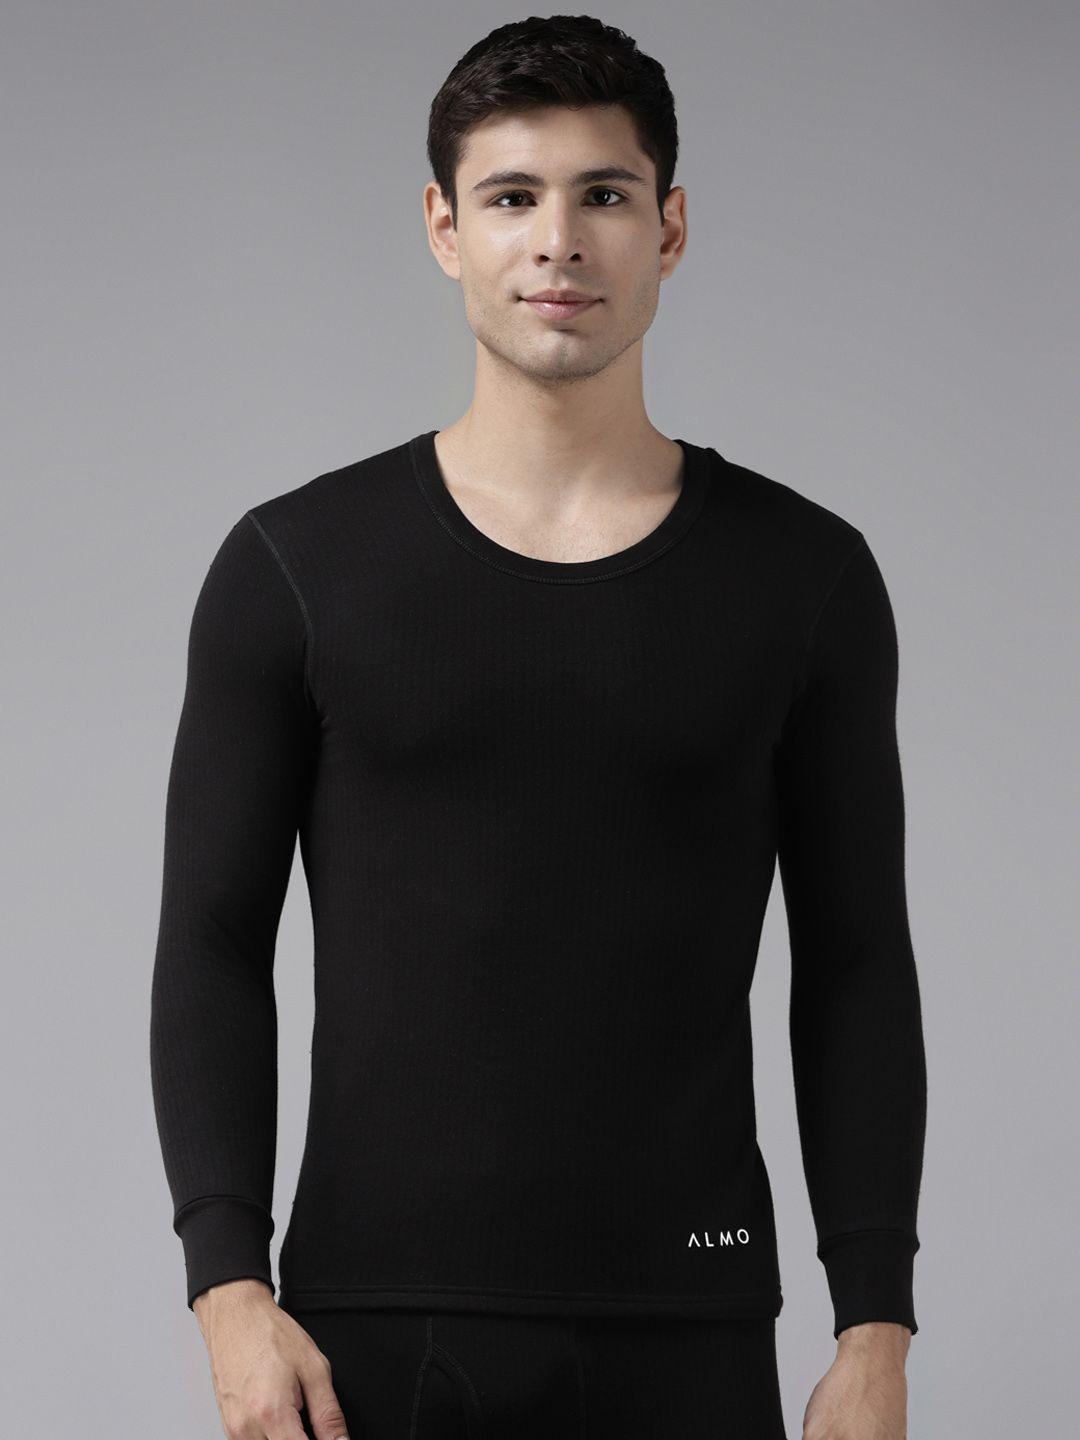 almo wear men black lightweight anti-pilling heat retention thermal top